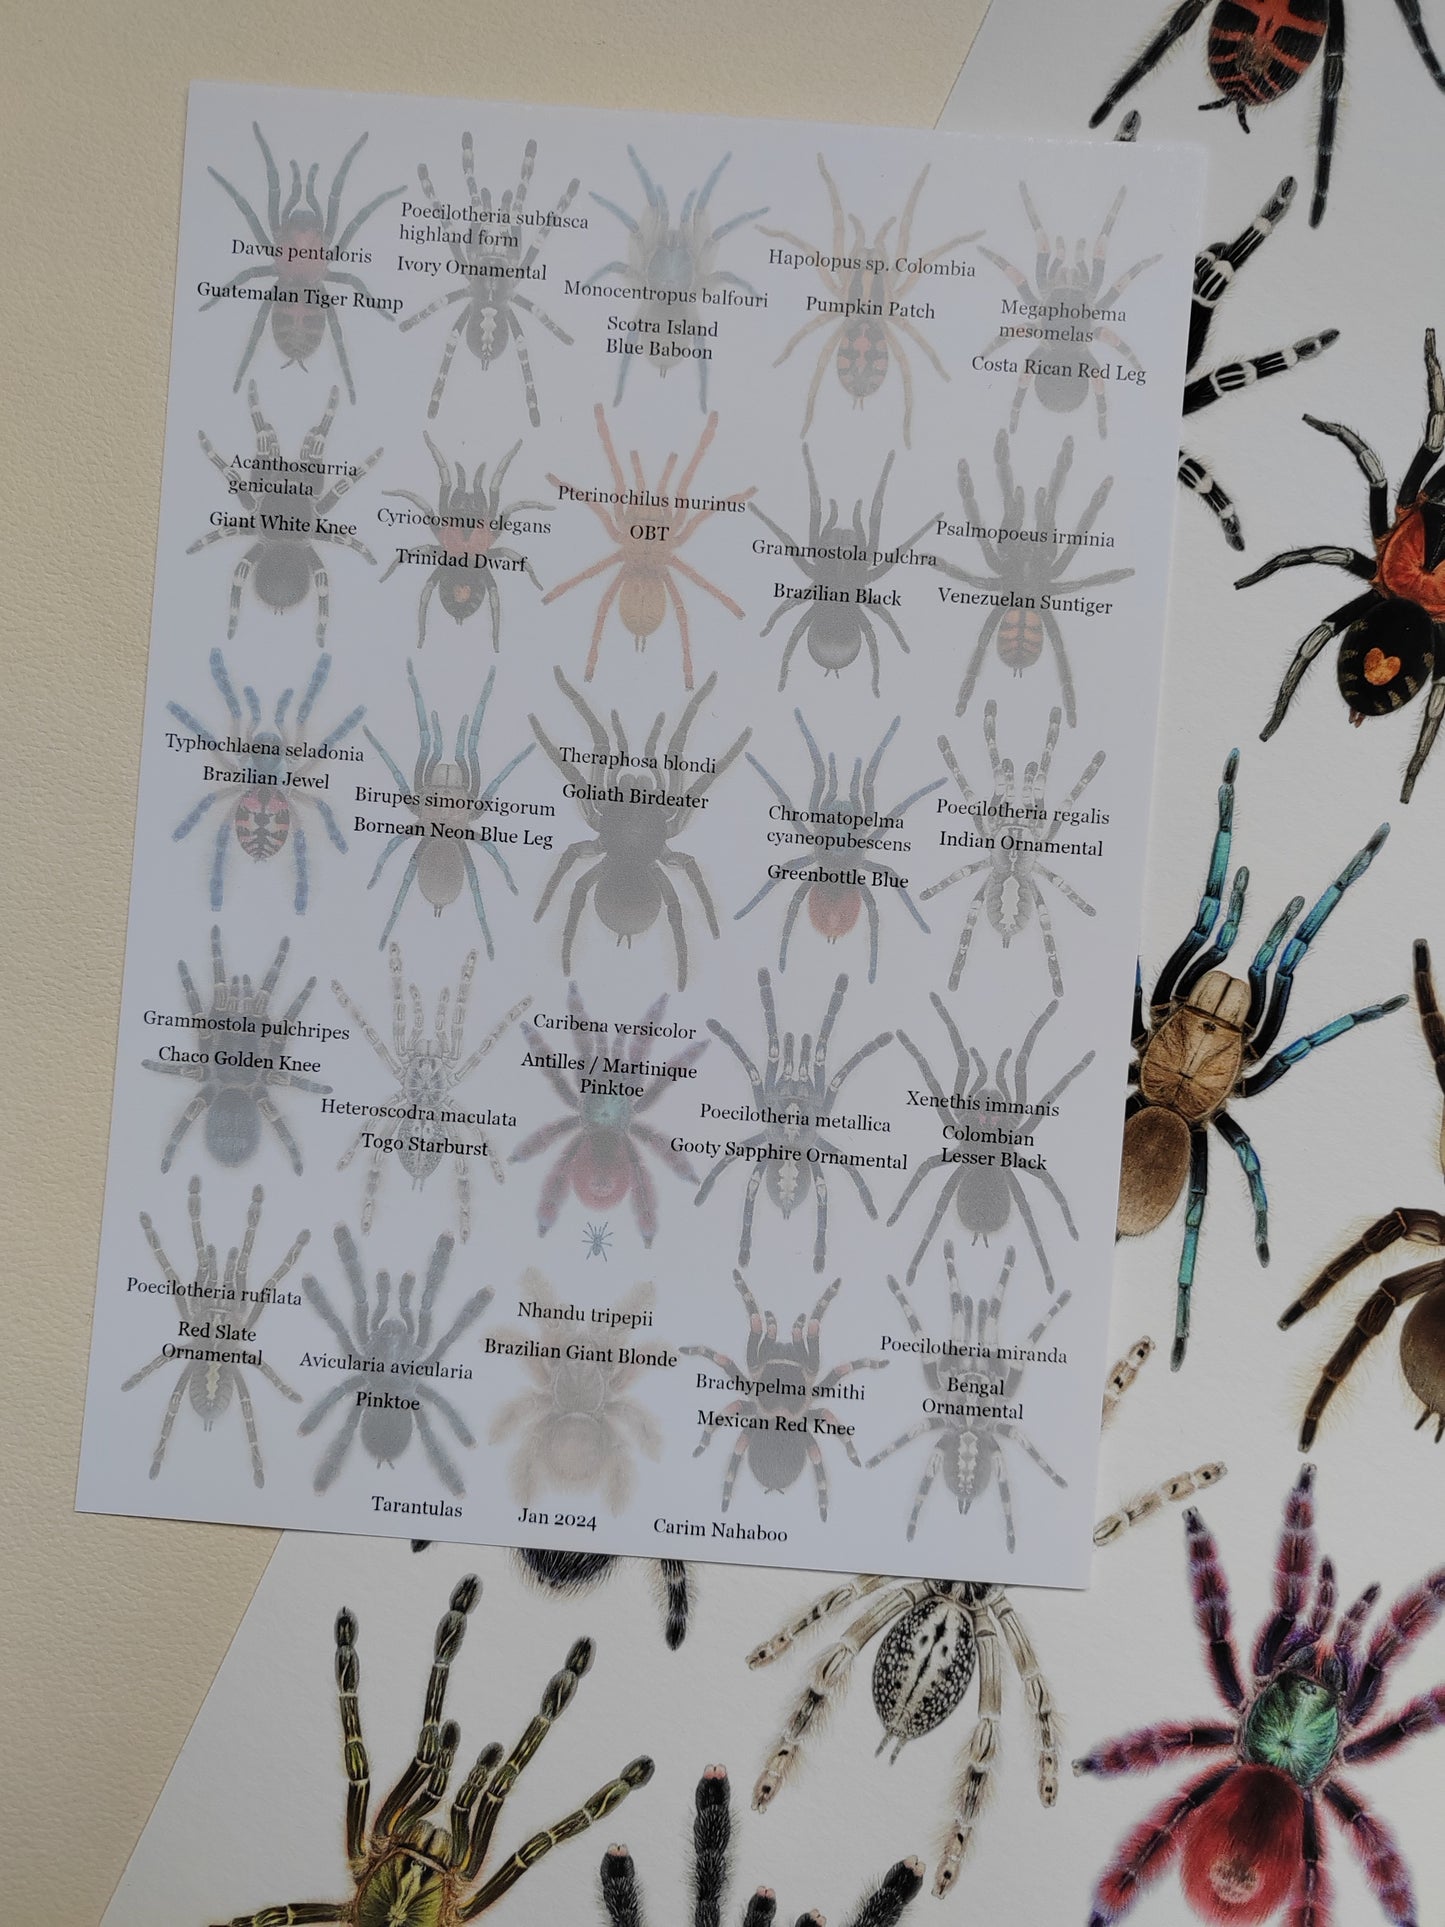 A3 size Tarantula species limited edition art print, with species key